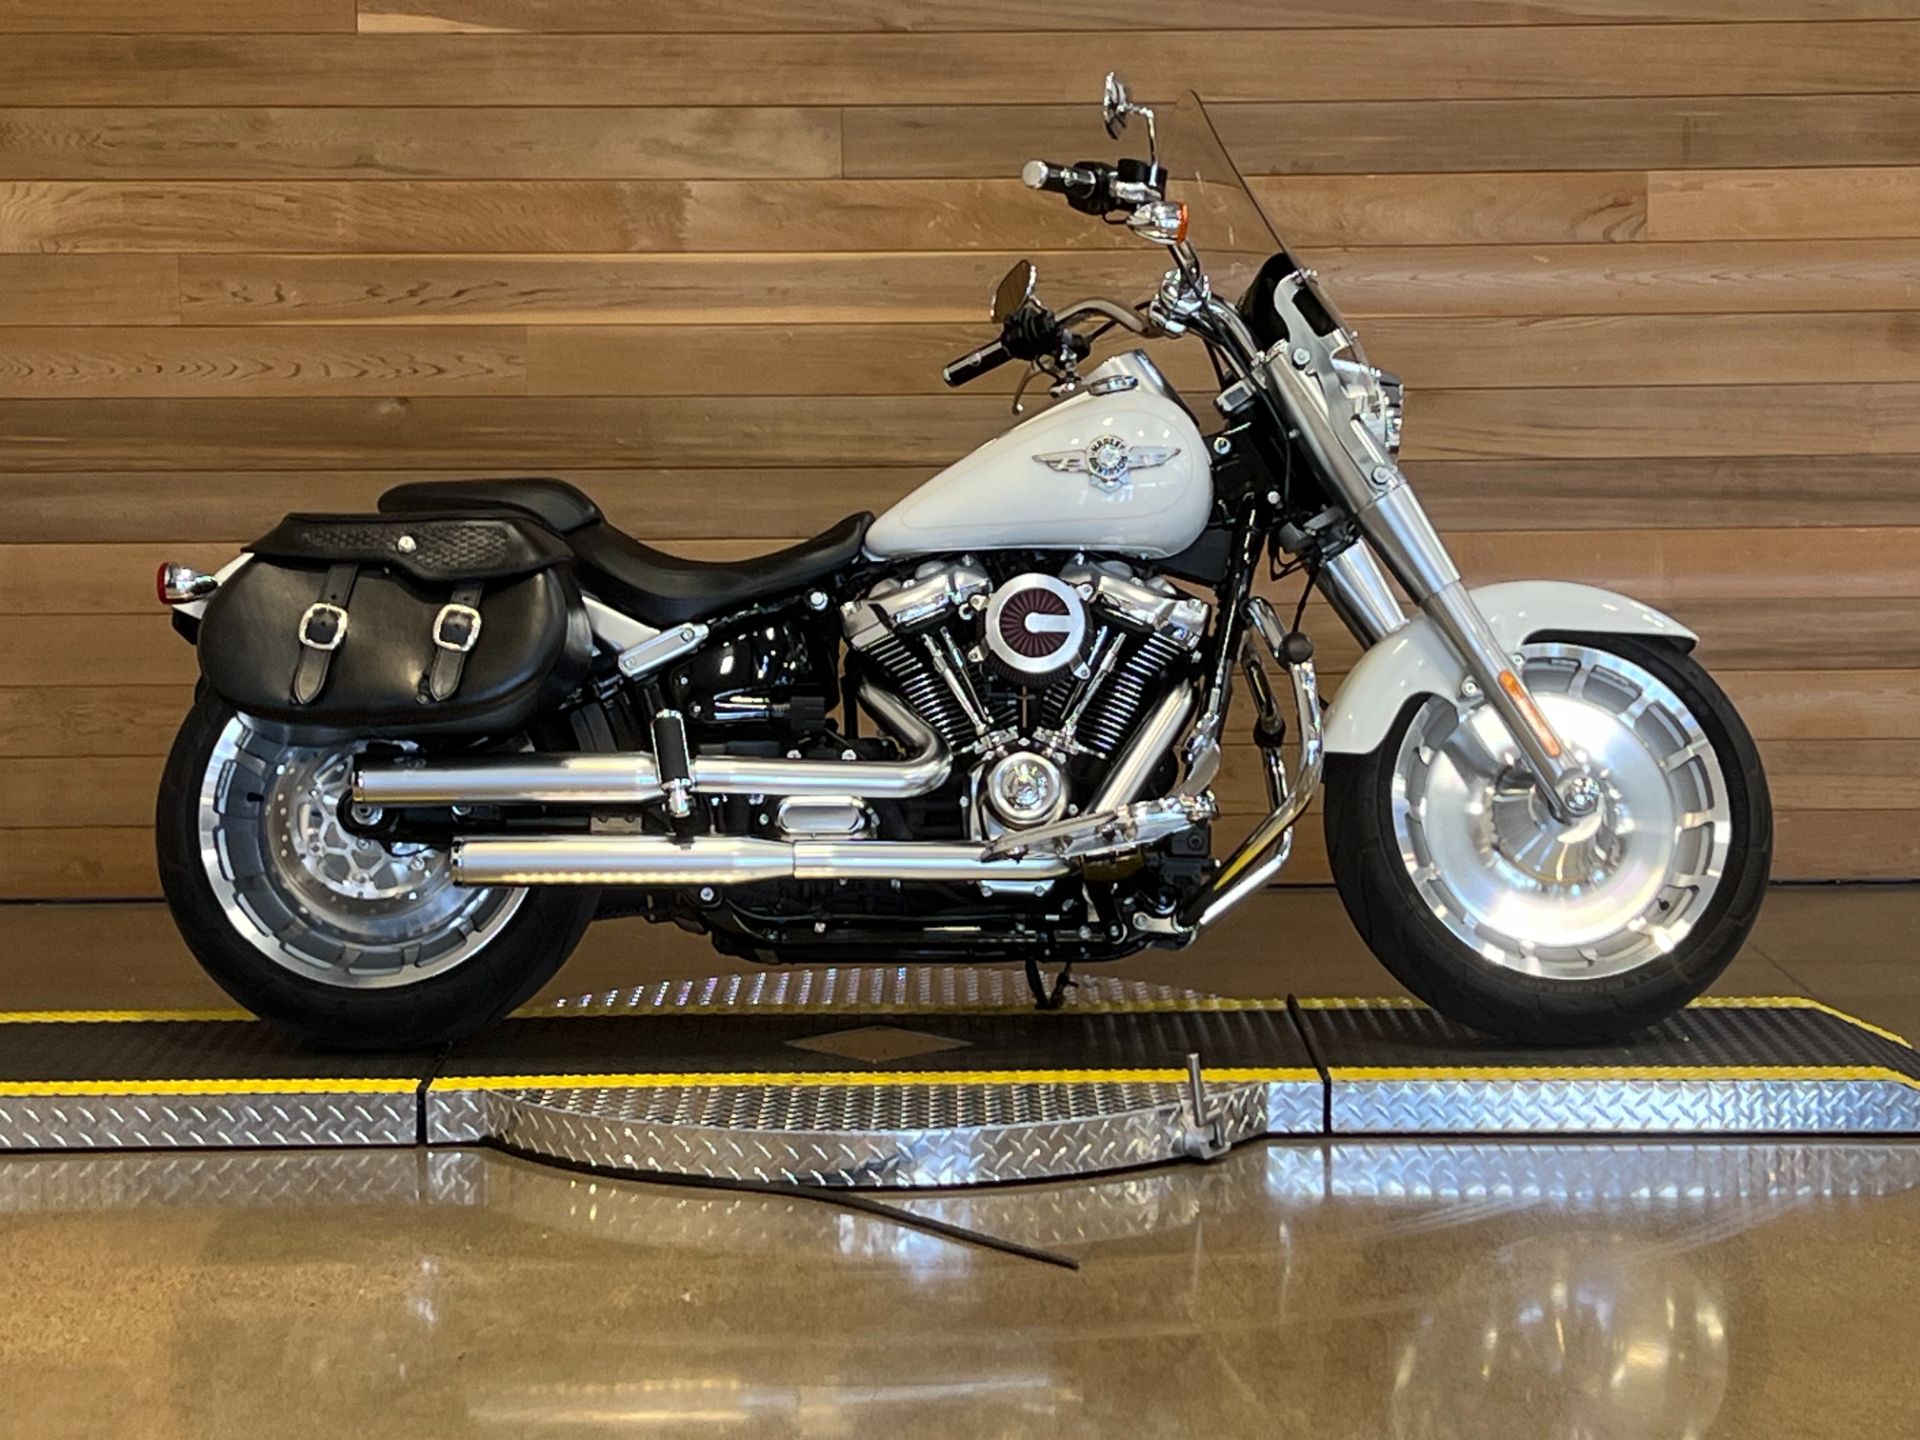 2018 Harley-Davidson Fat Boy® 114 in Salem, Oregon - Photo 1